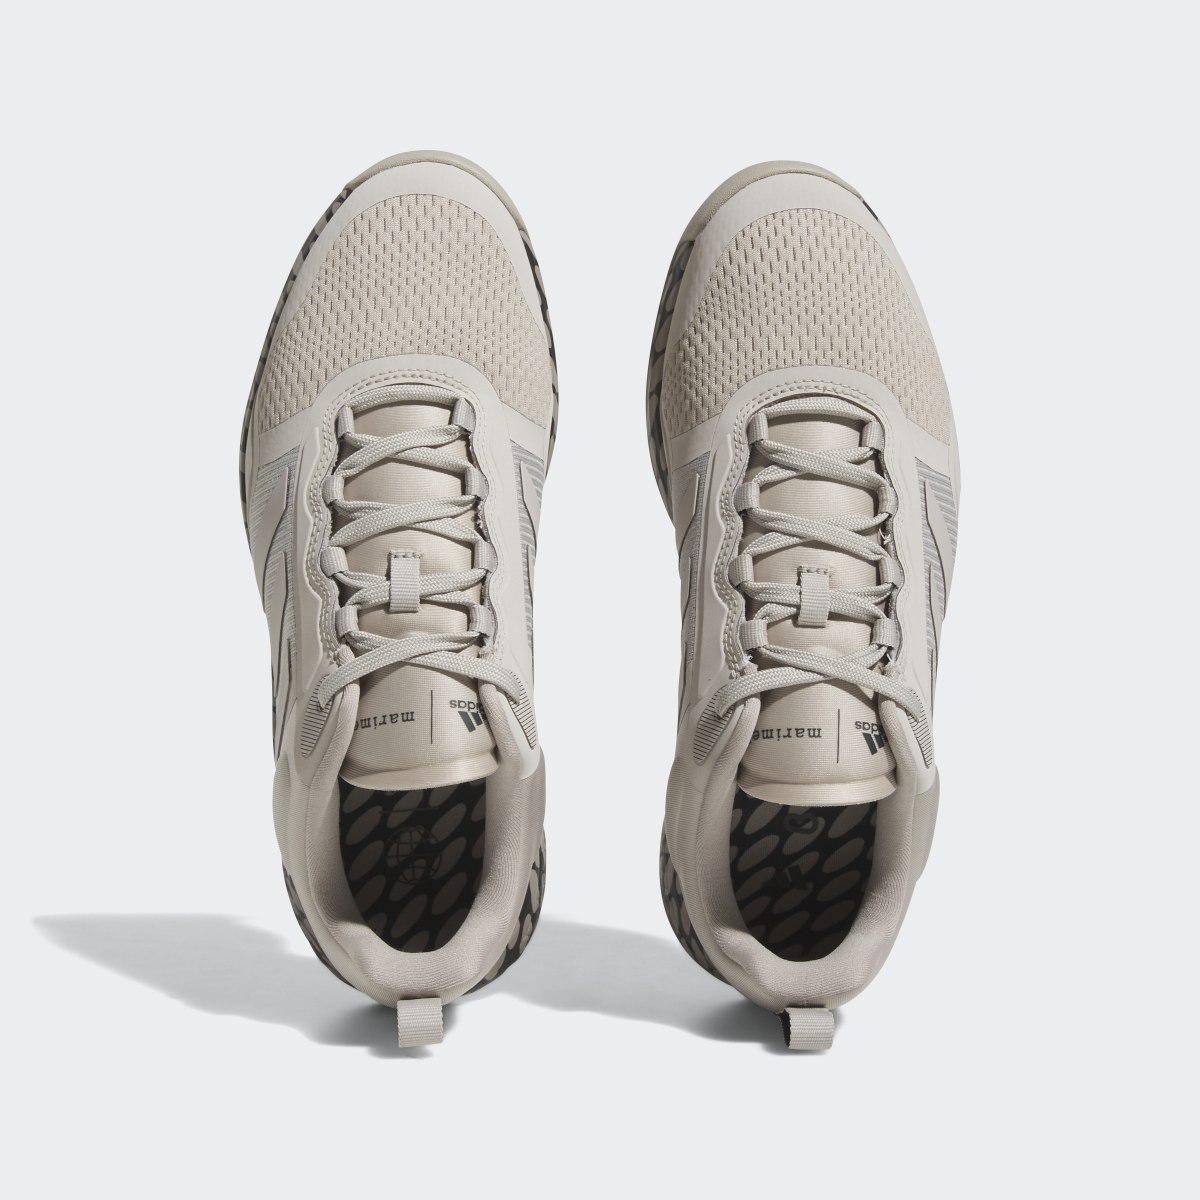 Adidas x Marimekko Zoysia Spikeless Golf Shoes. 6